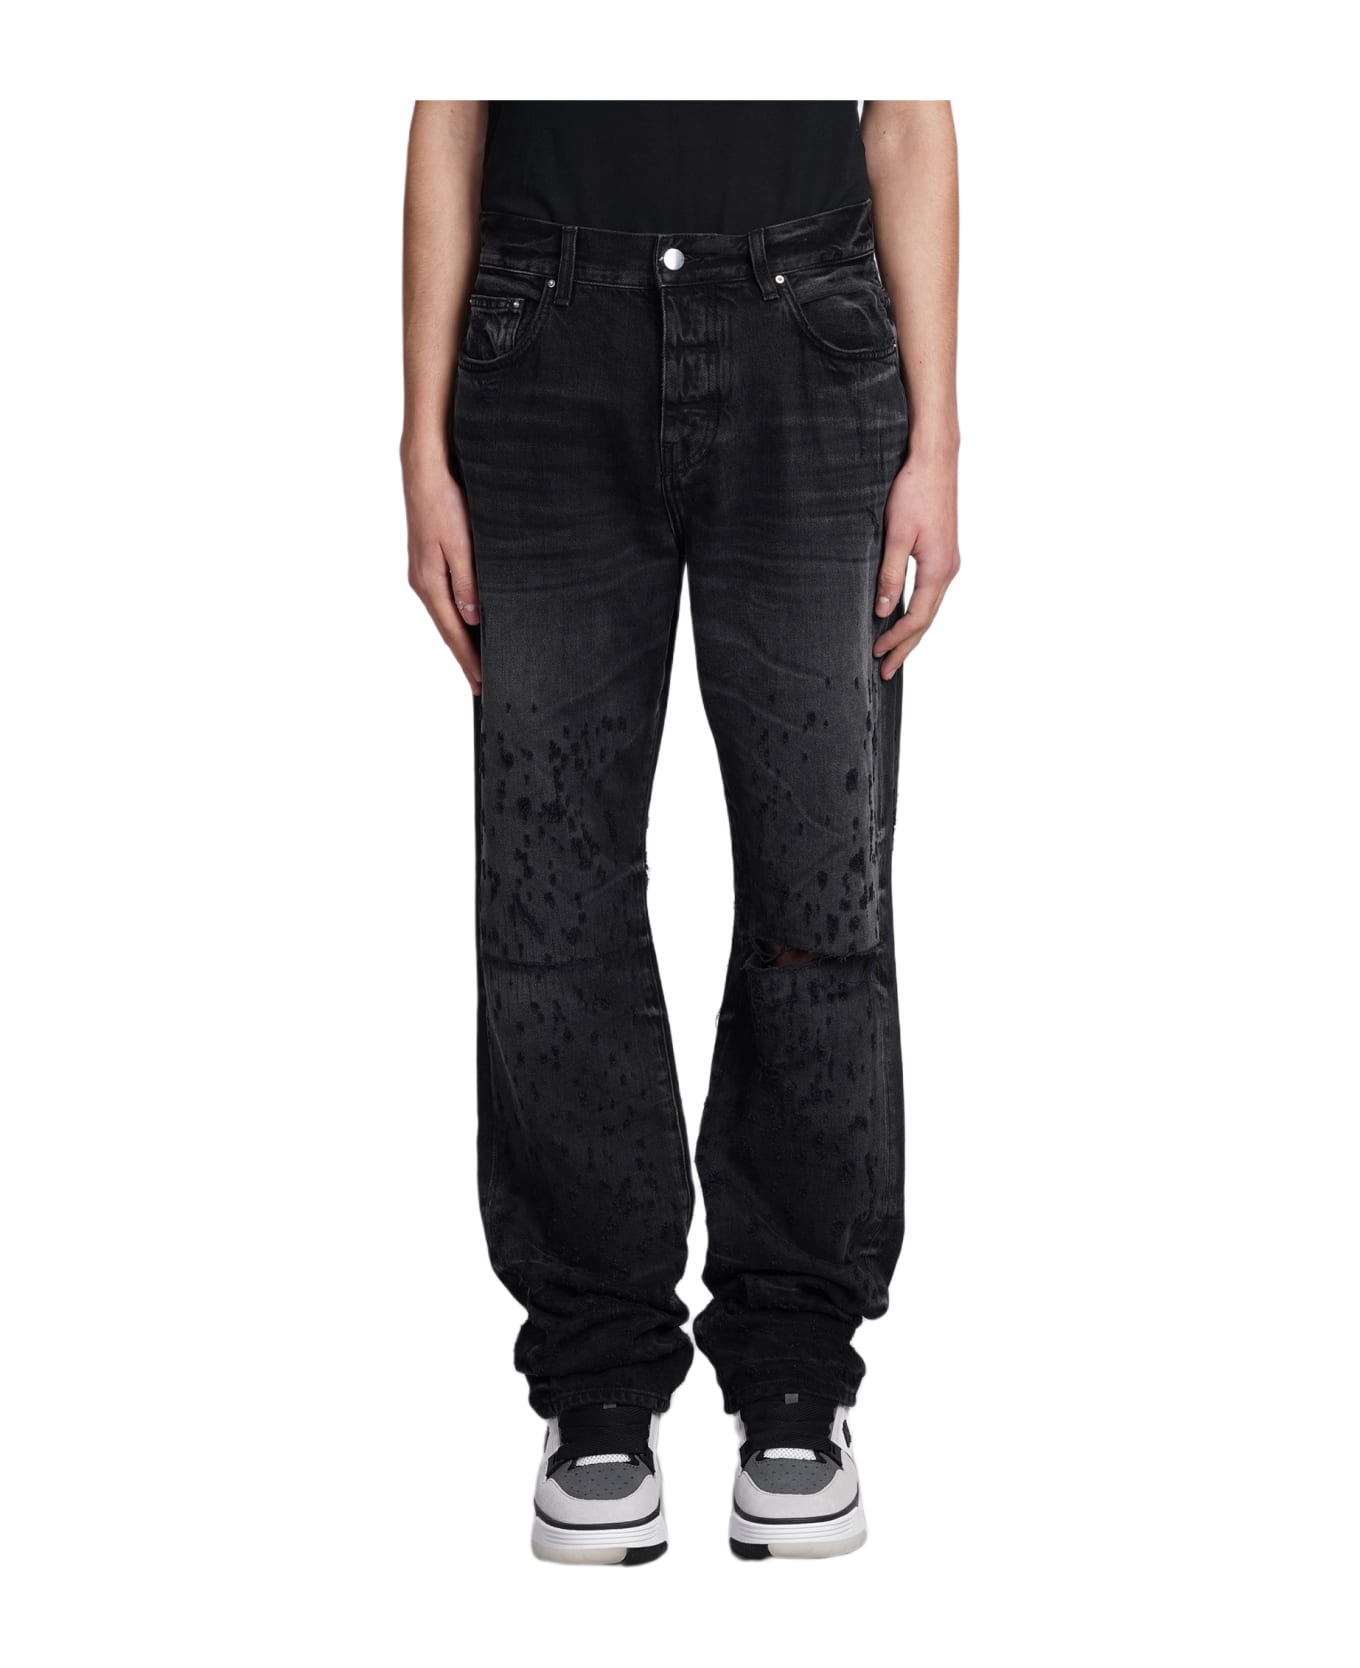 AMIRI Jeans In Black Cotton - black